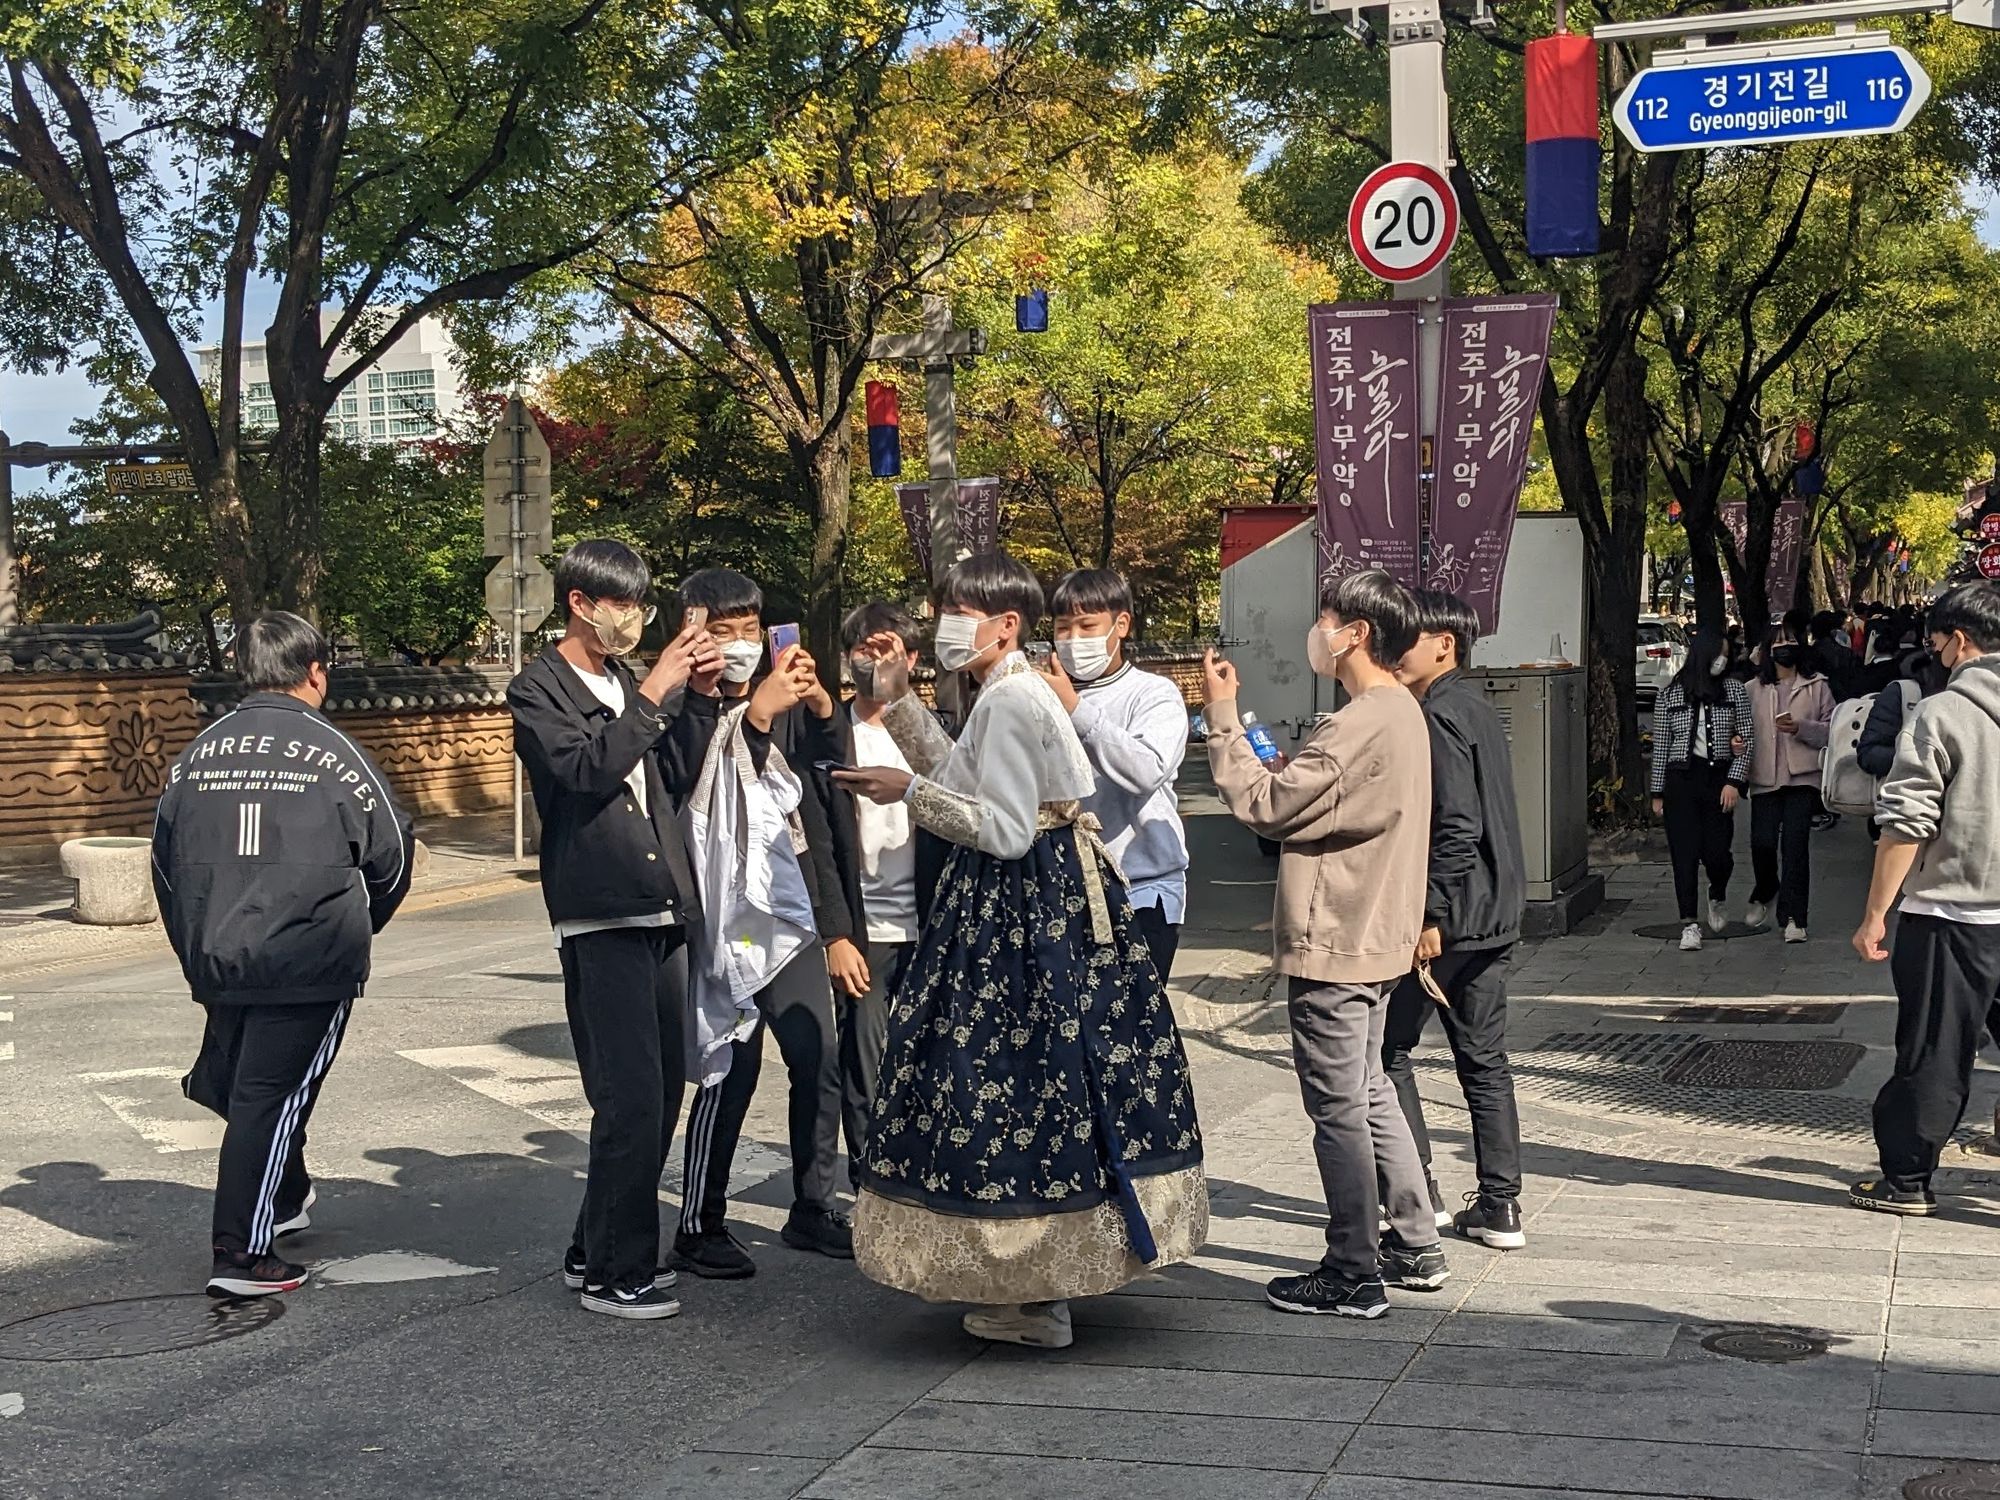 Trip Report: Korea Oct '22